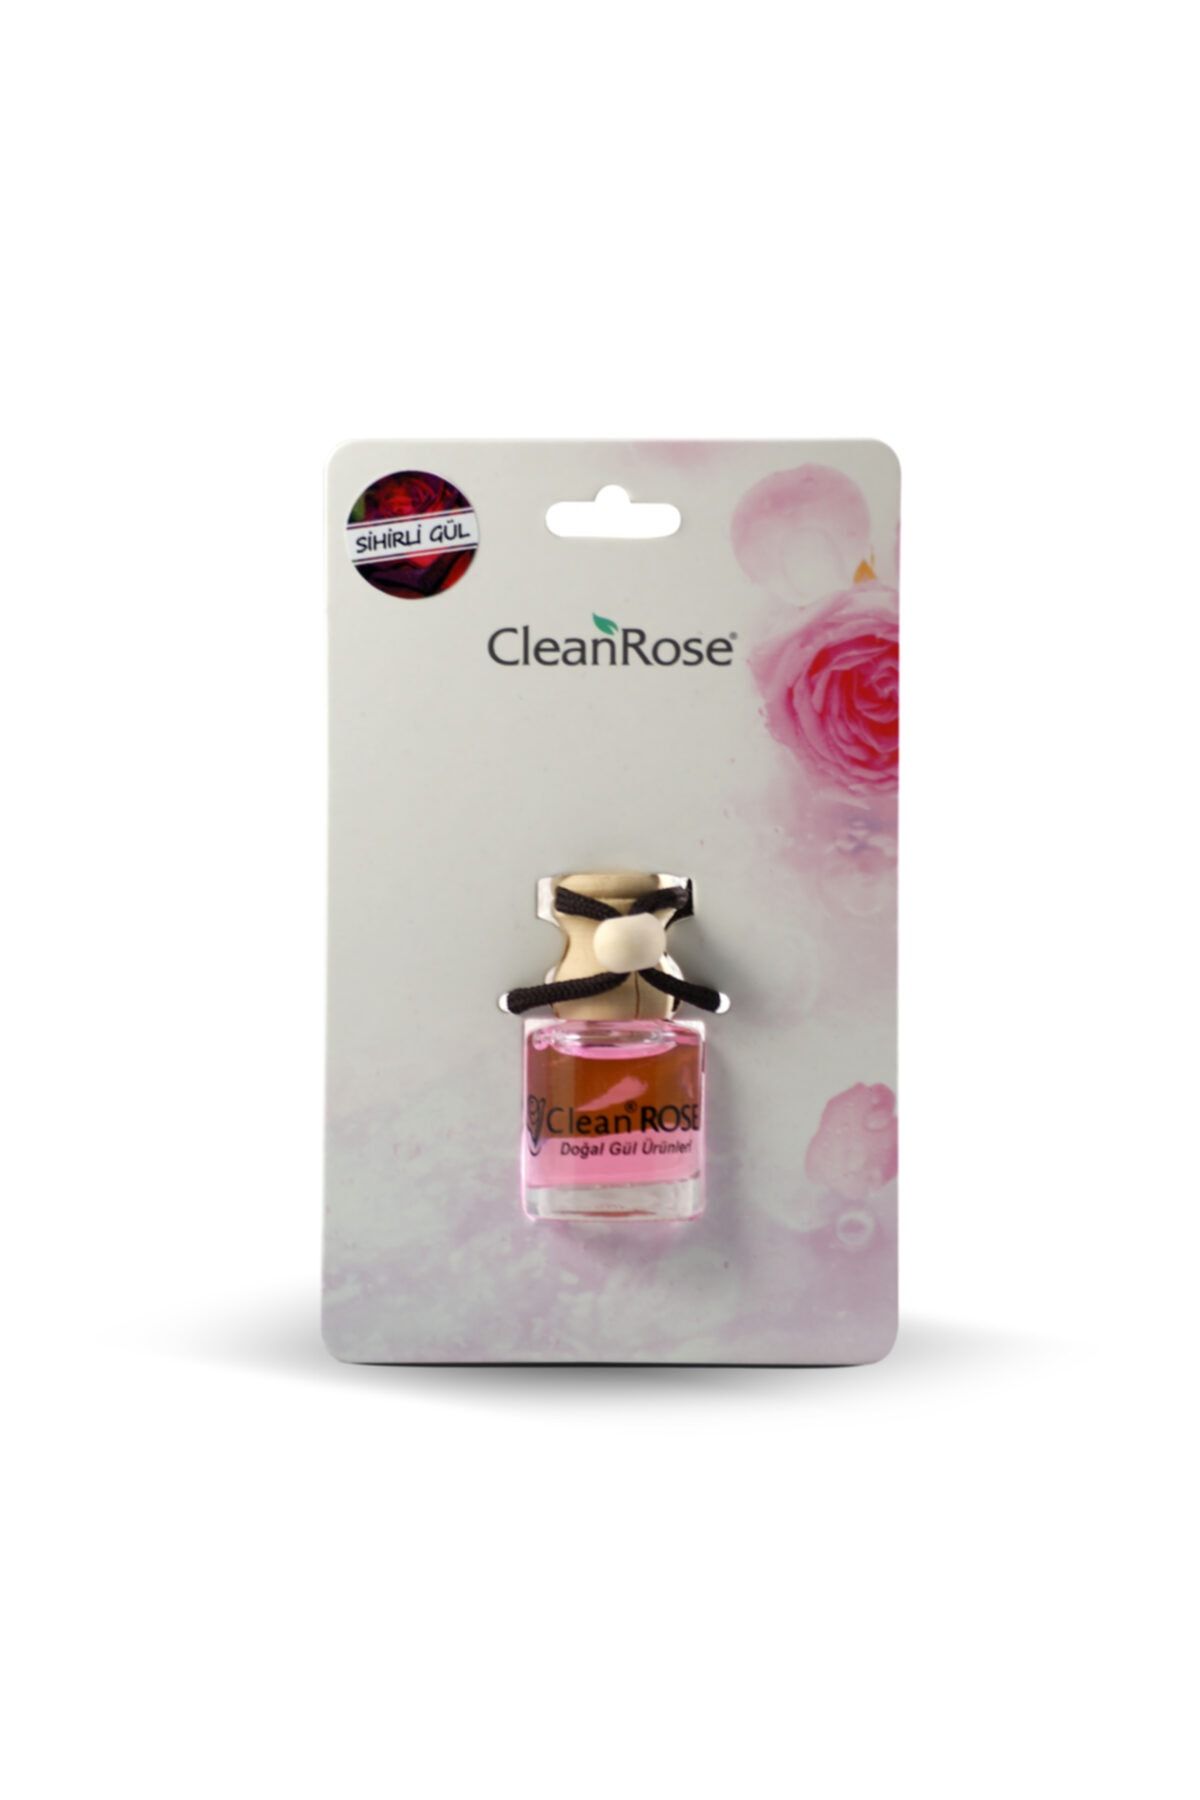 Clean Rose Cleanrose Araç Parfümü Sihirli Gül